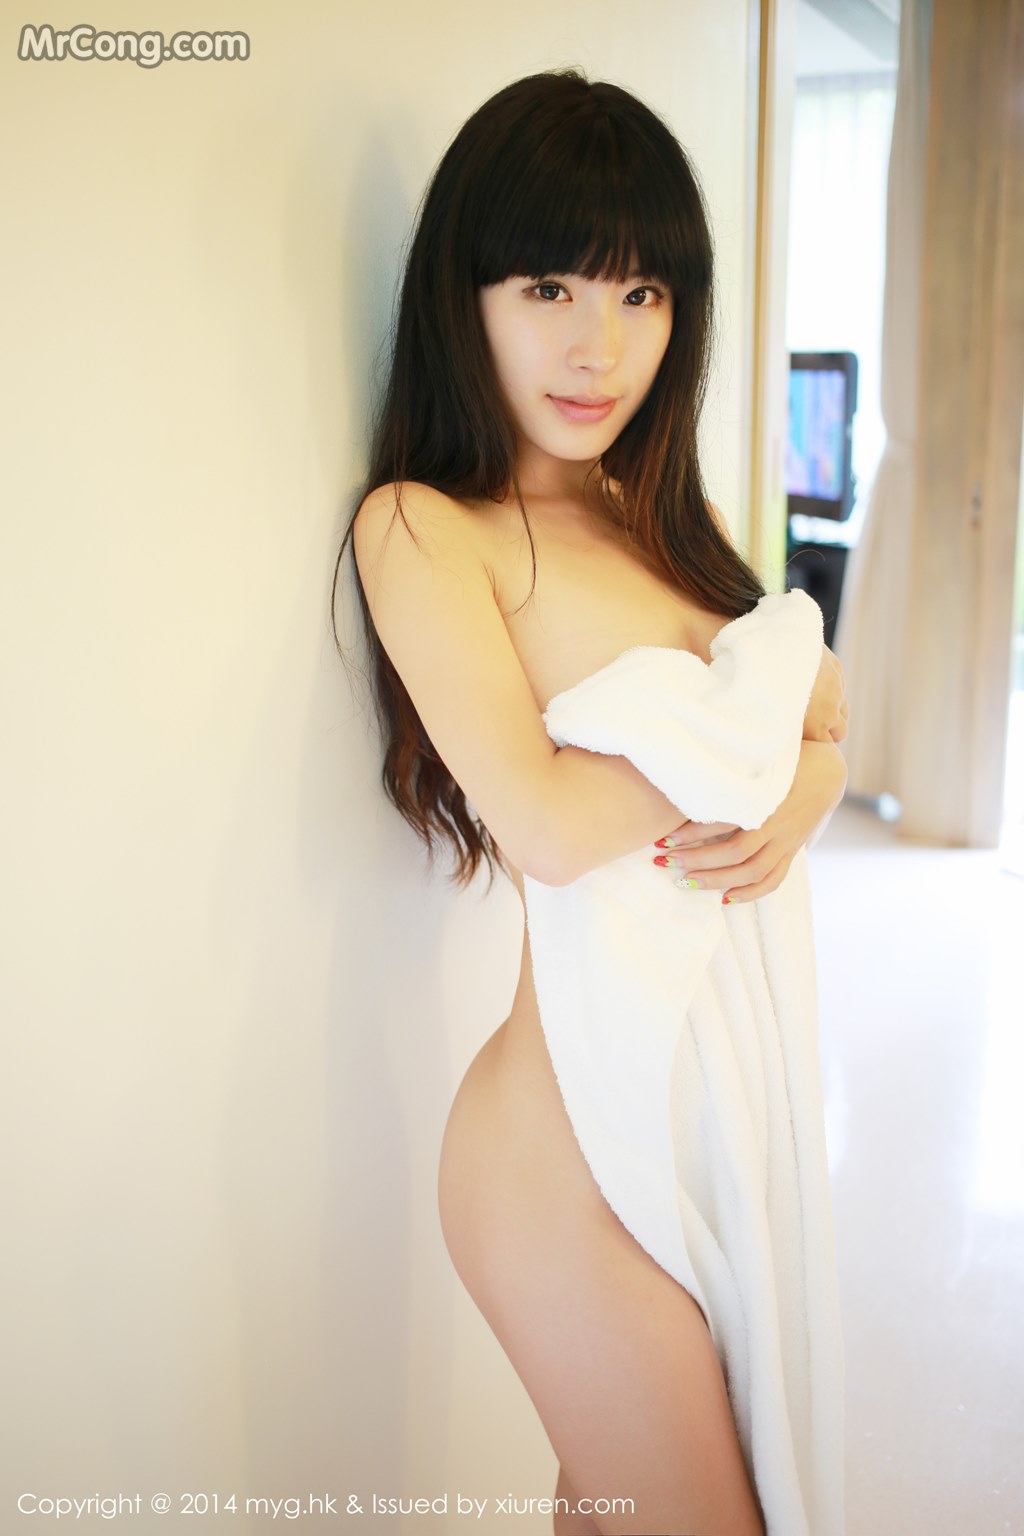 MyGirl Vol.027: Verna Model (刘雪 妮) (60 photos)